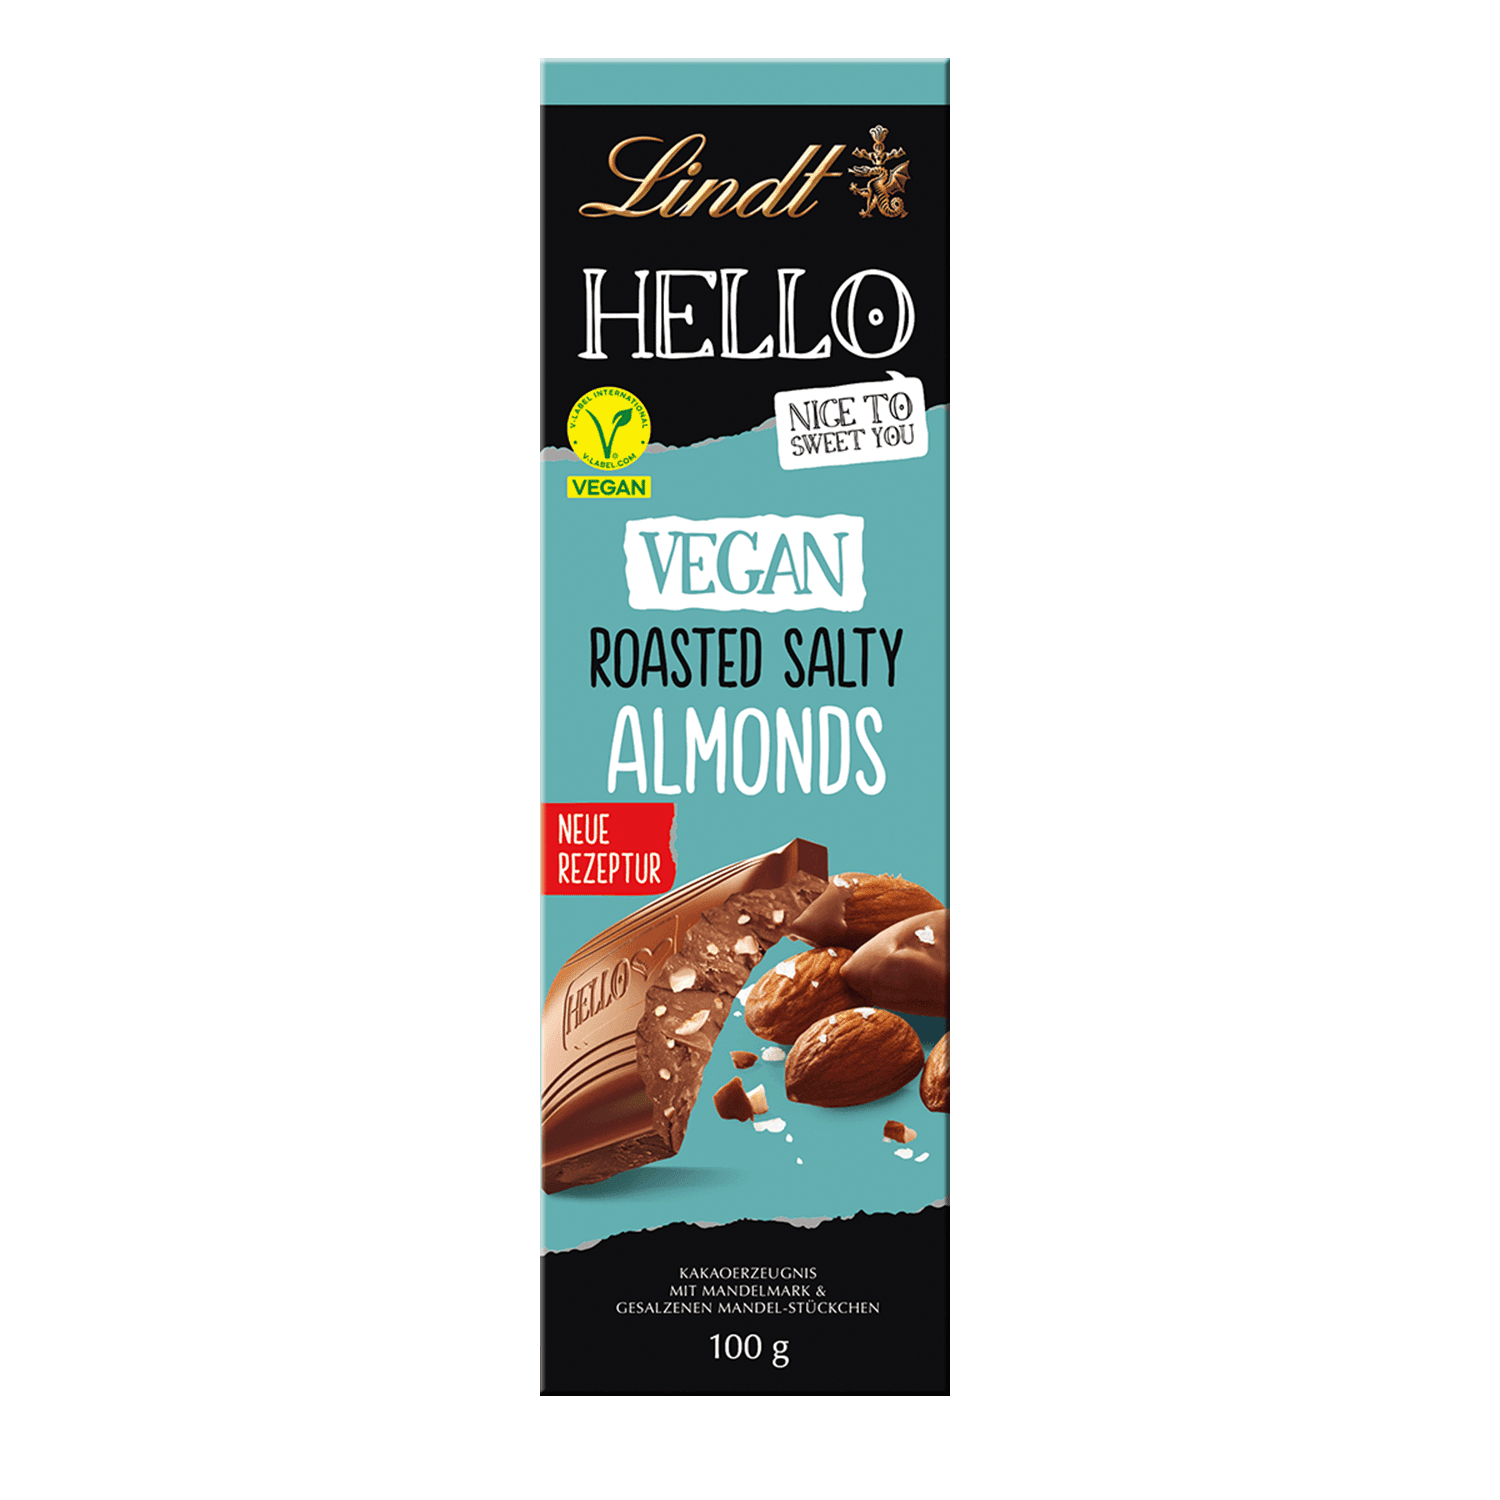 HELLO Vegan Roasted Salty Almonds, 100g